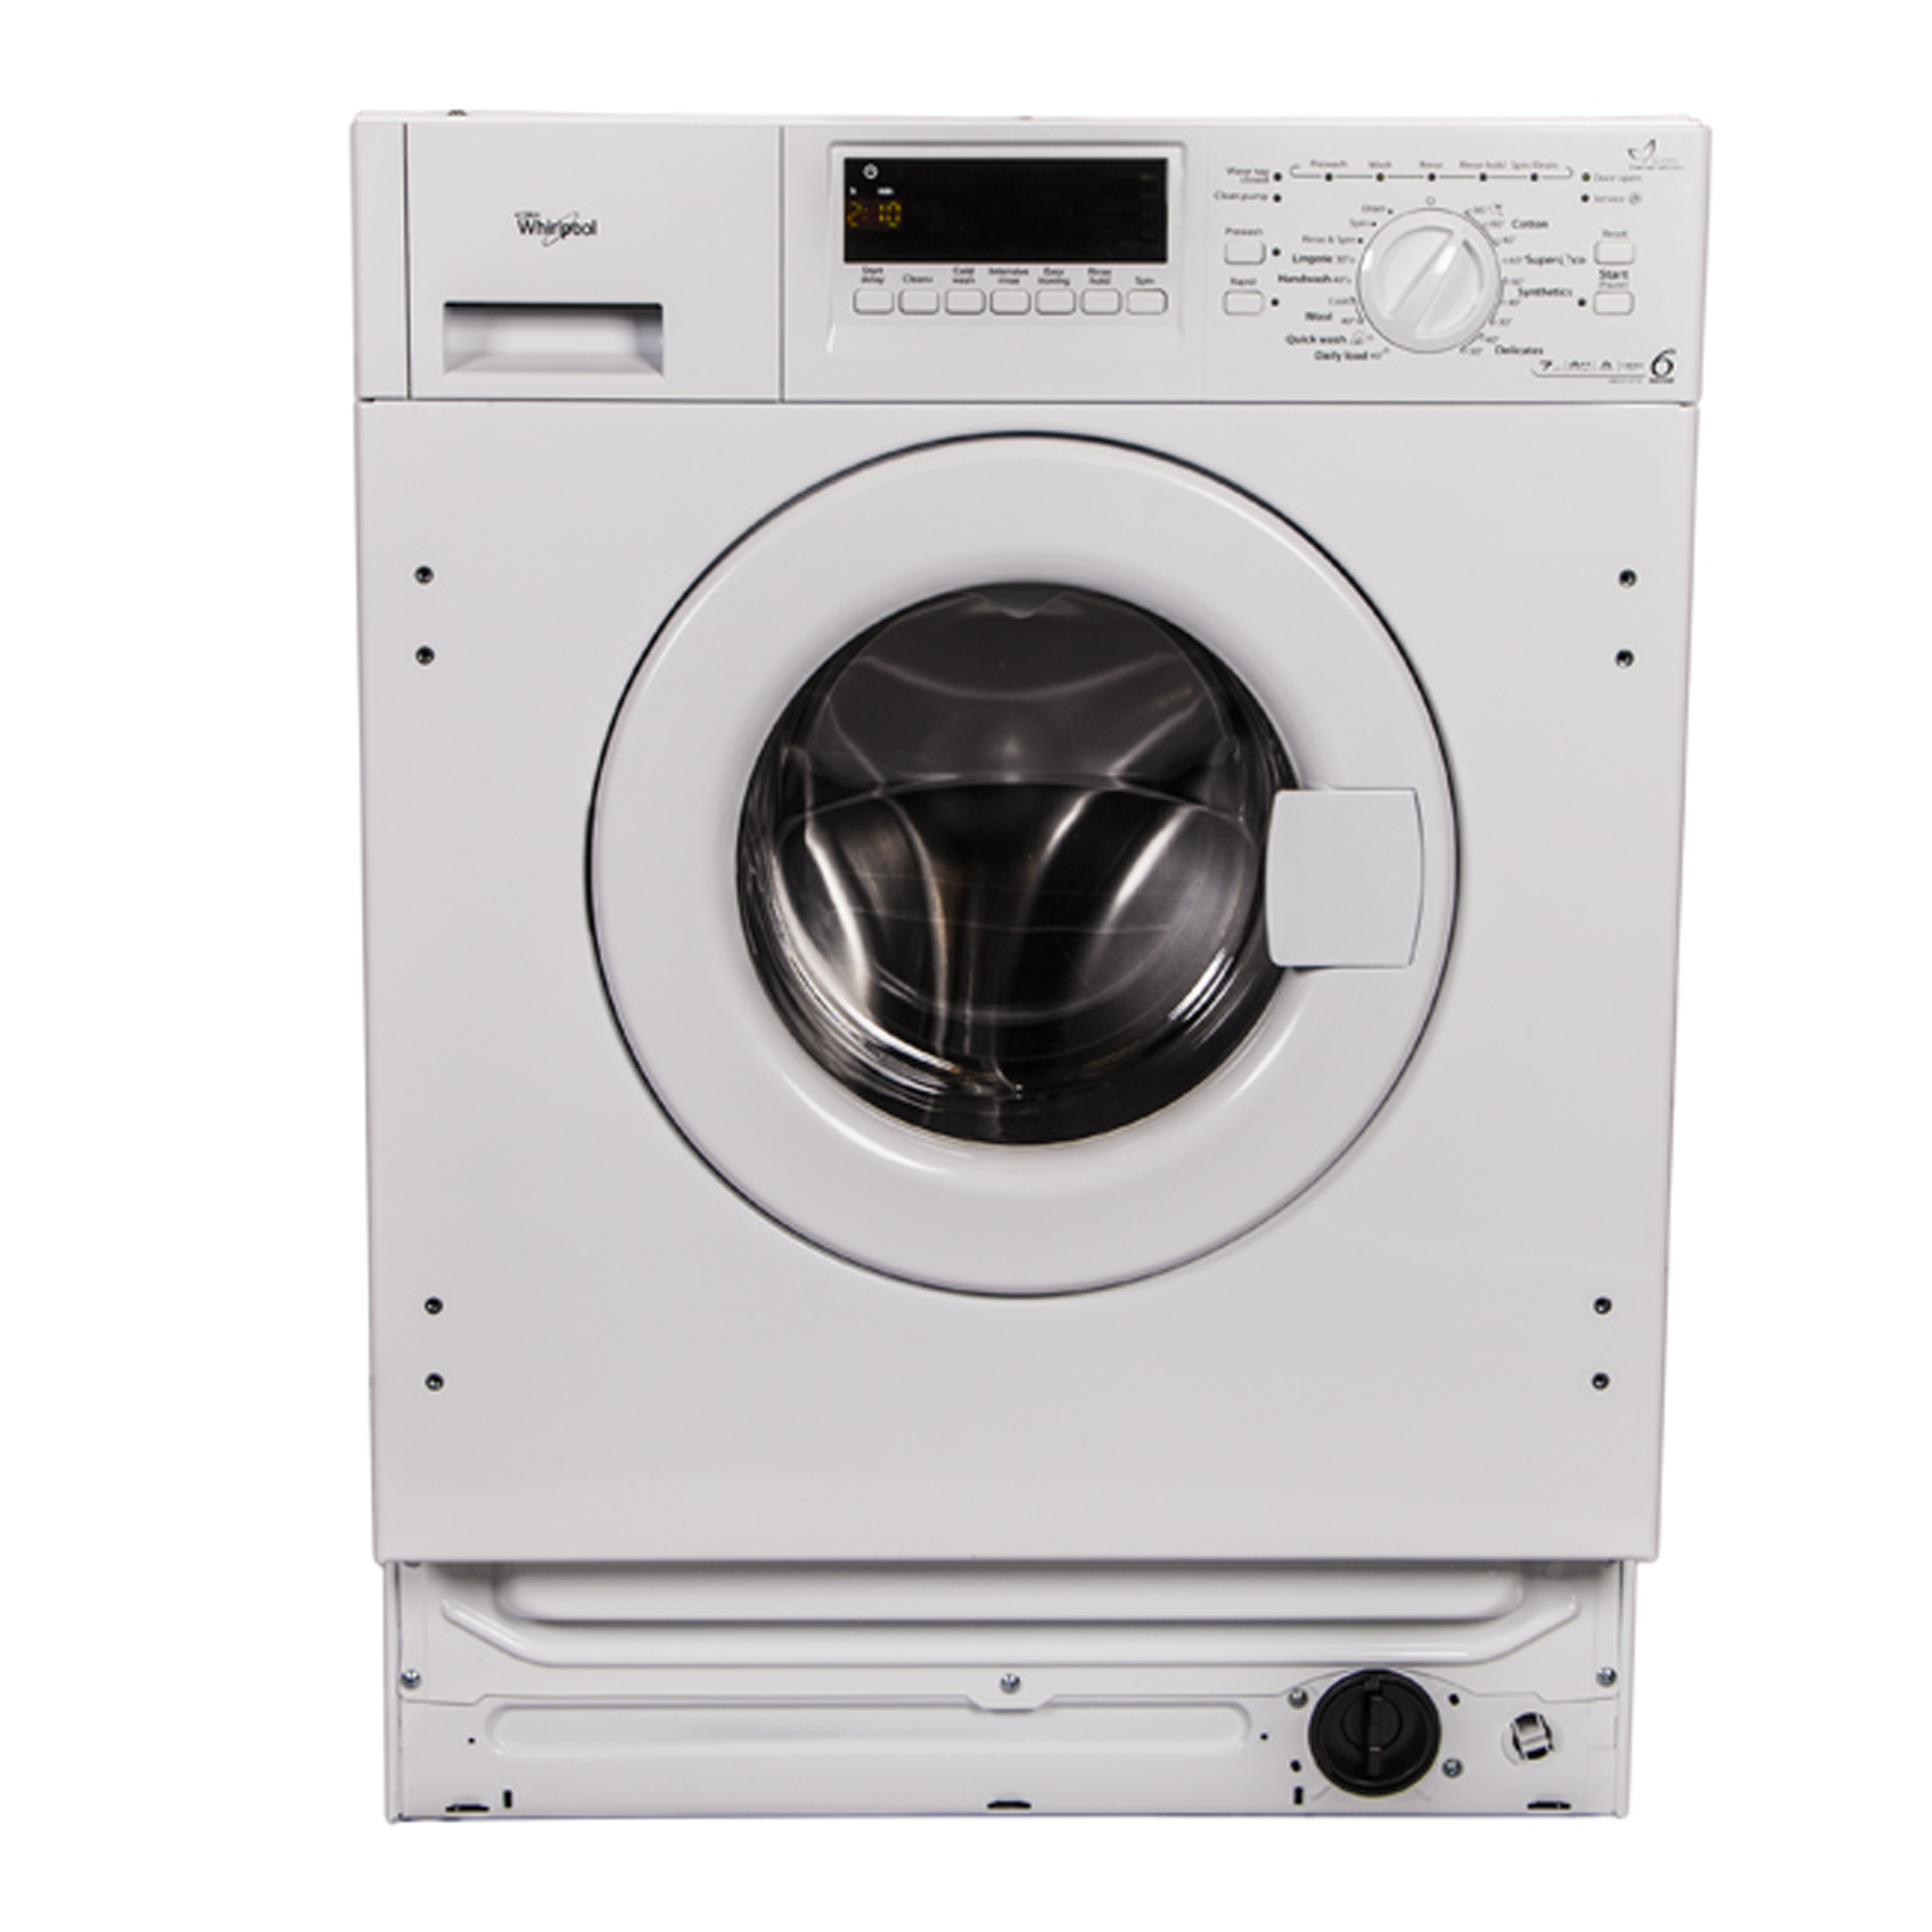 blanco washing machine instructions